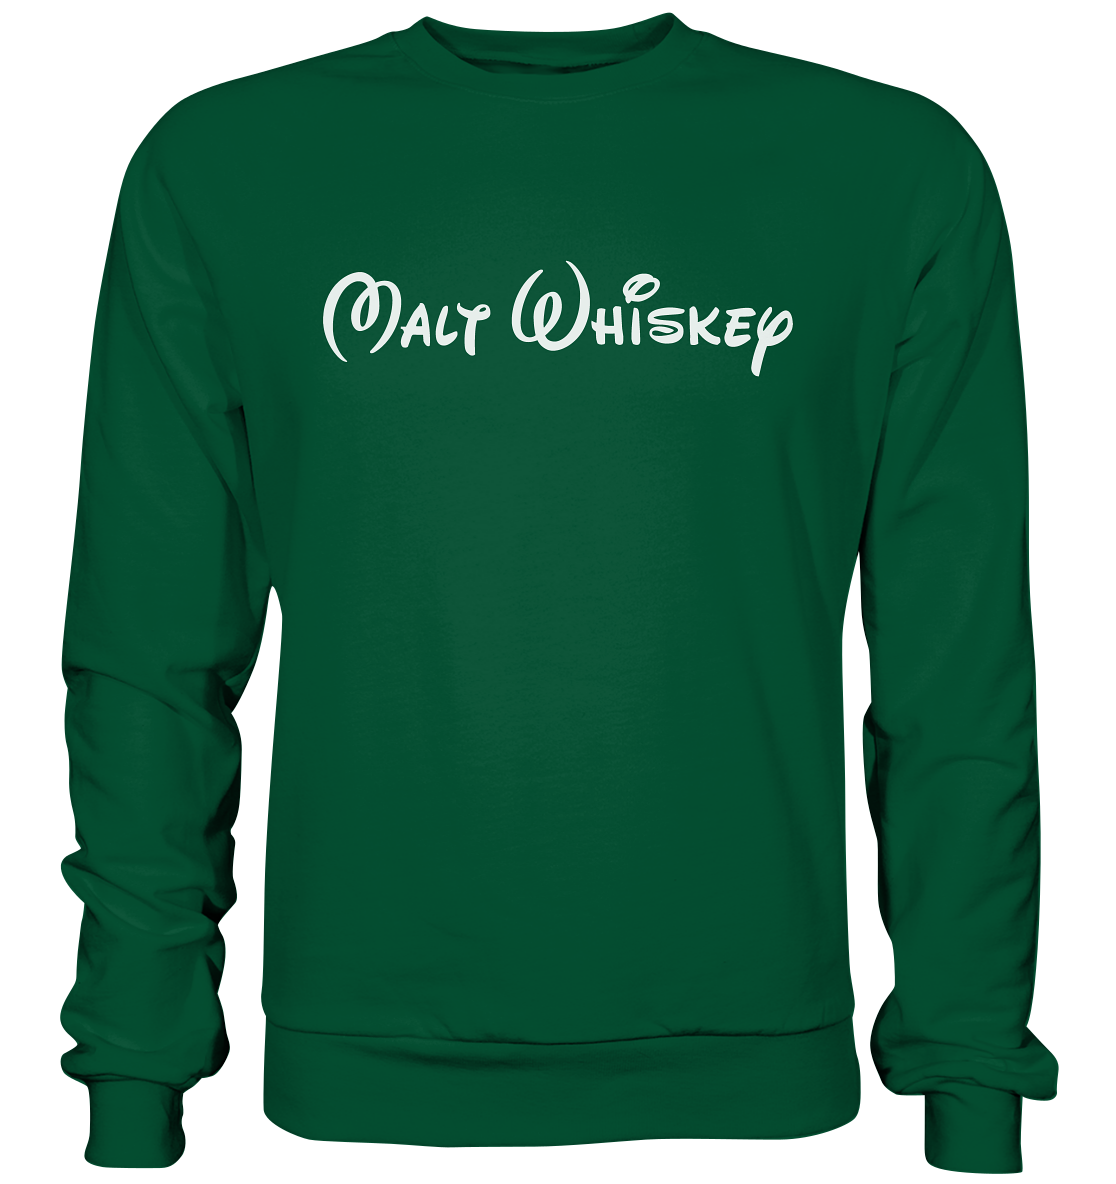 Malt Whiskey - Basic Sweatshirt